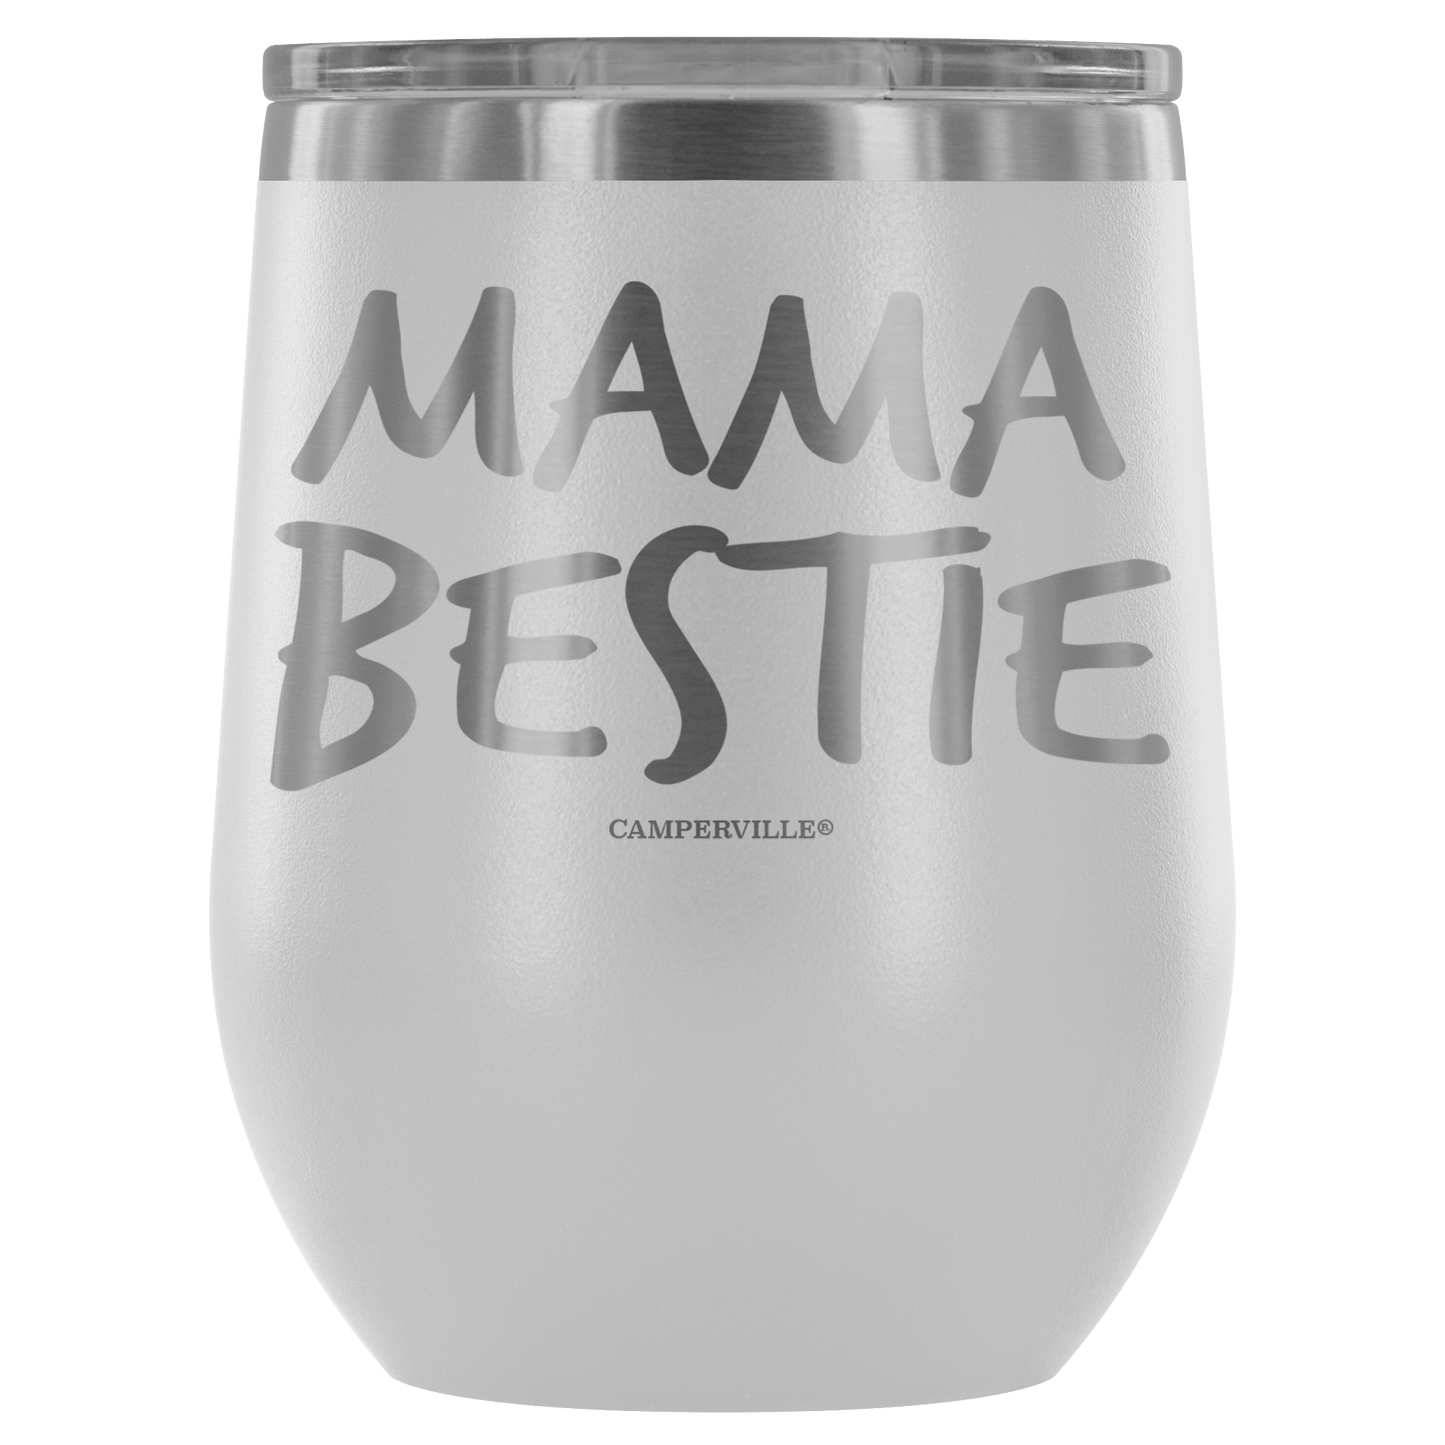 "Mama Bestie" Stemless Wine Cup